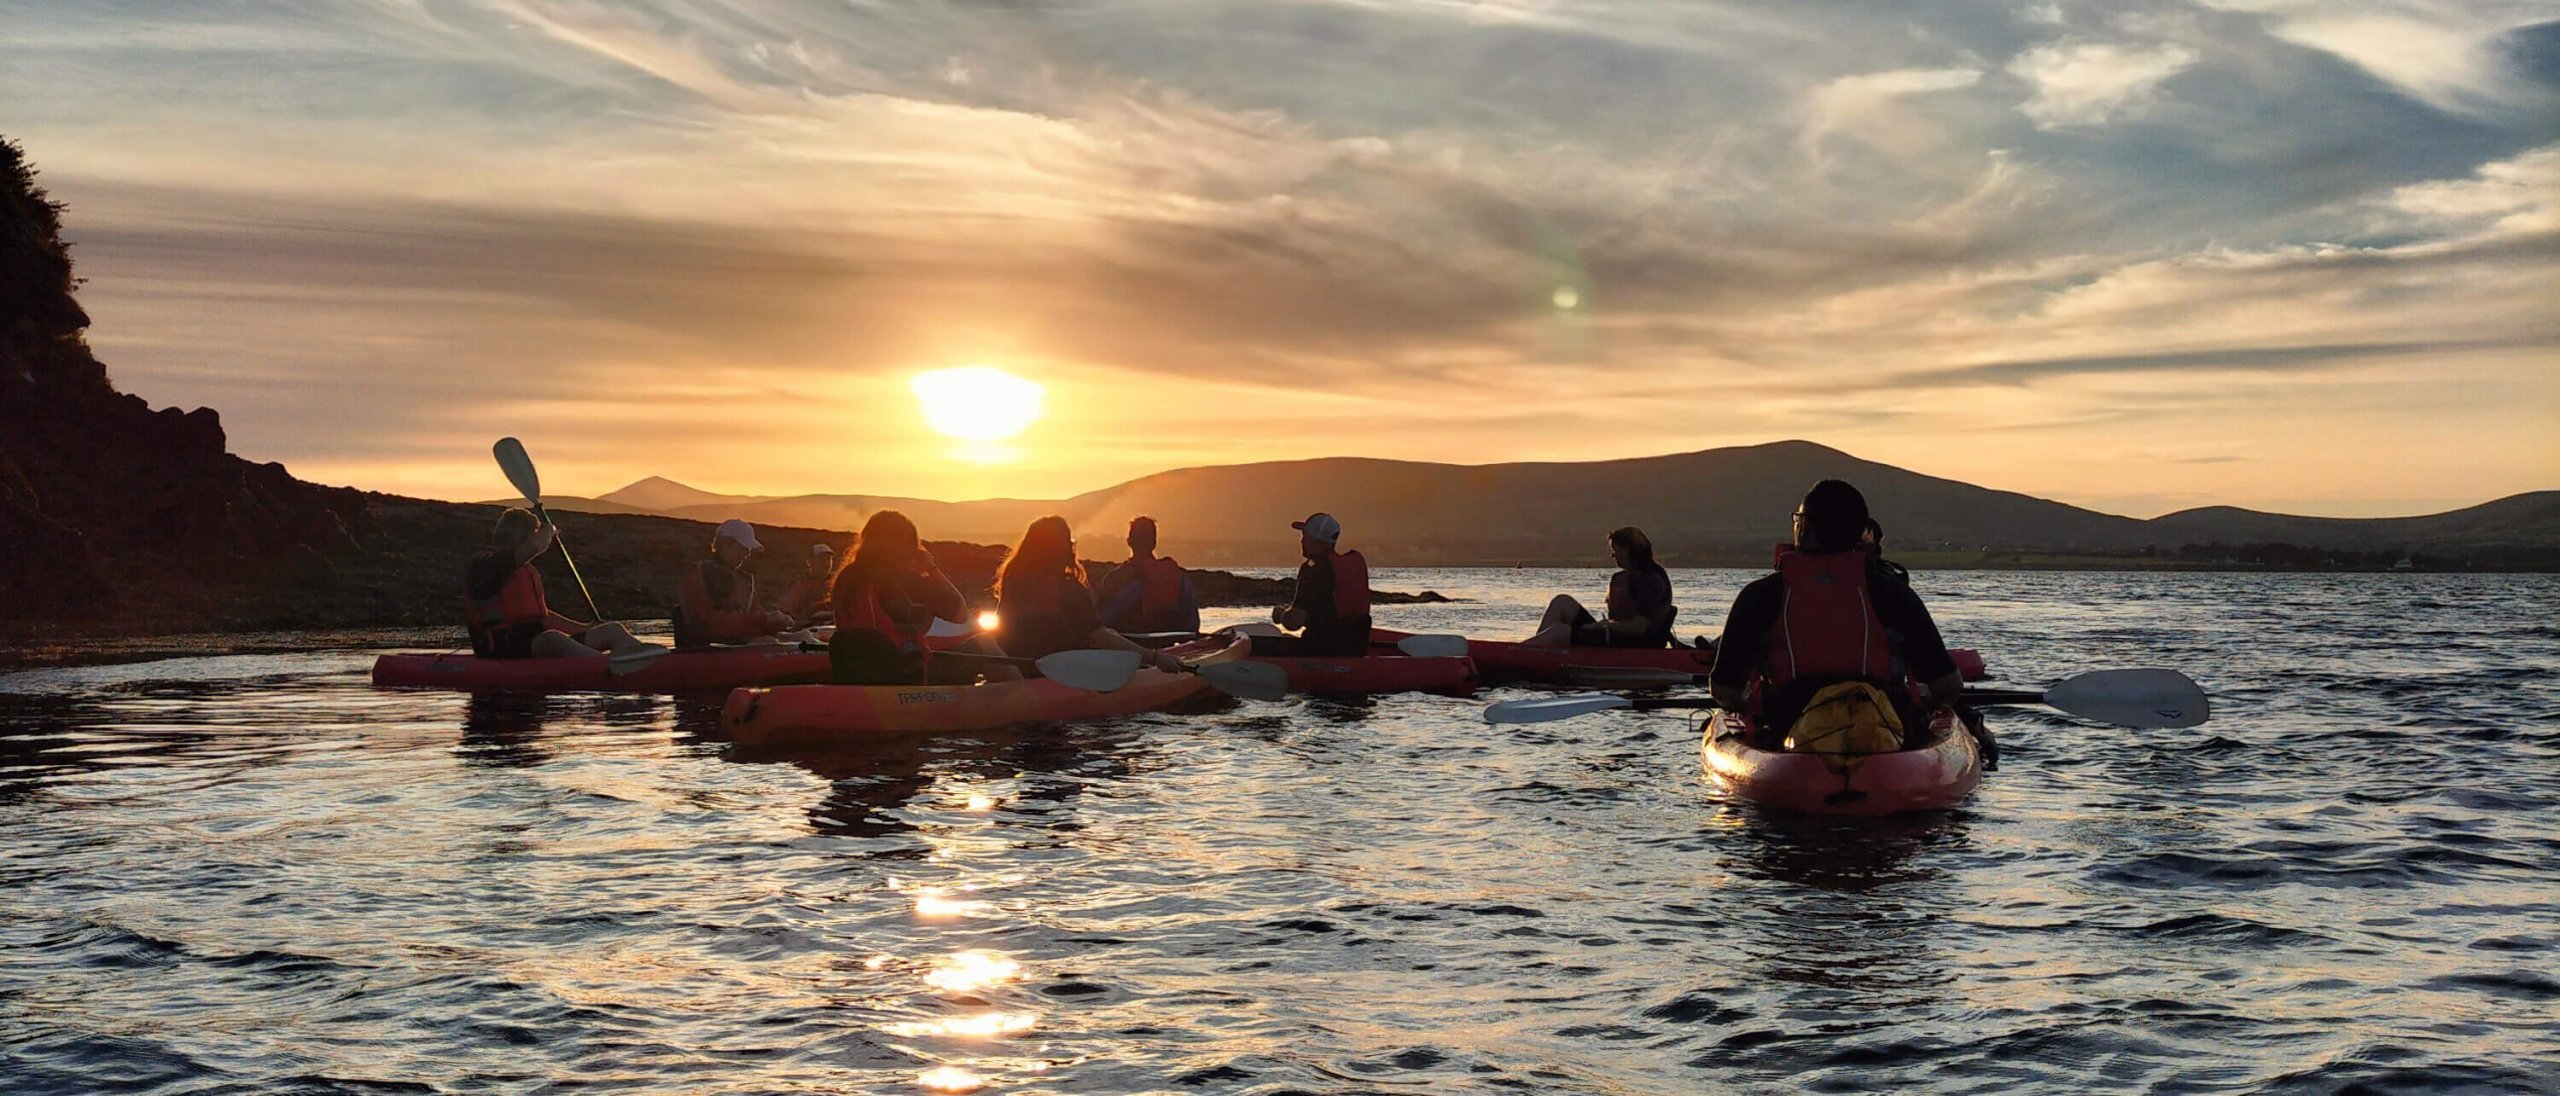 Adventure tour group kayaking in Ireland with sunset